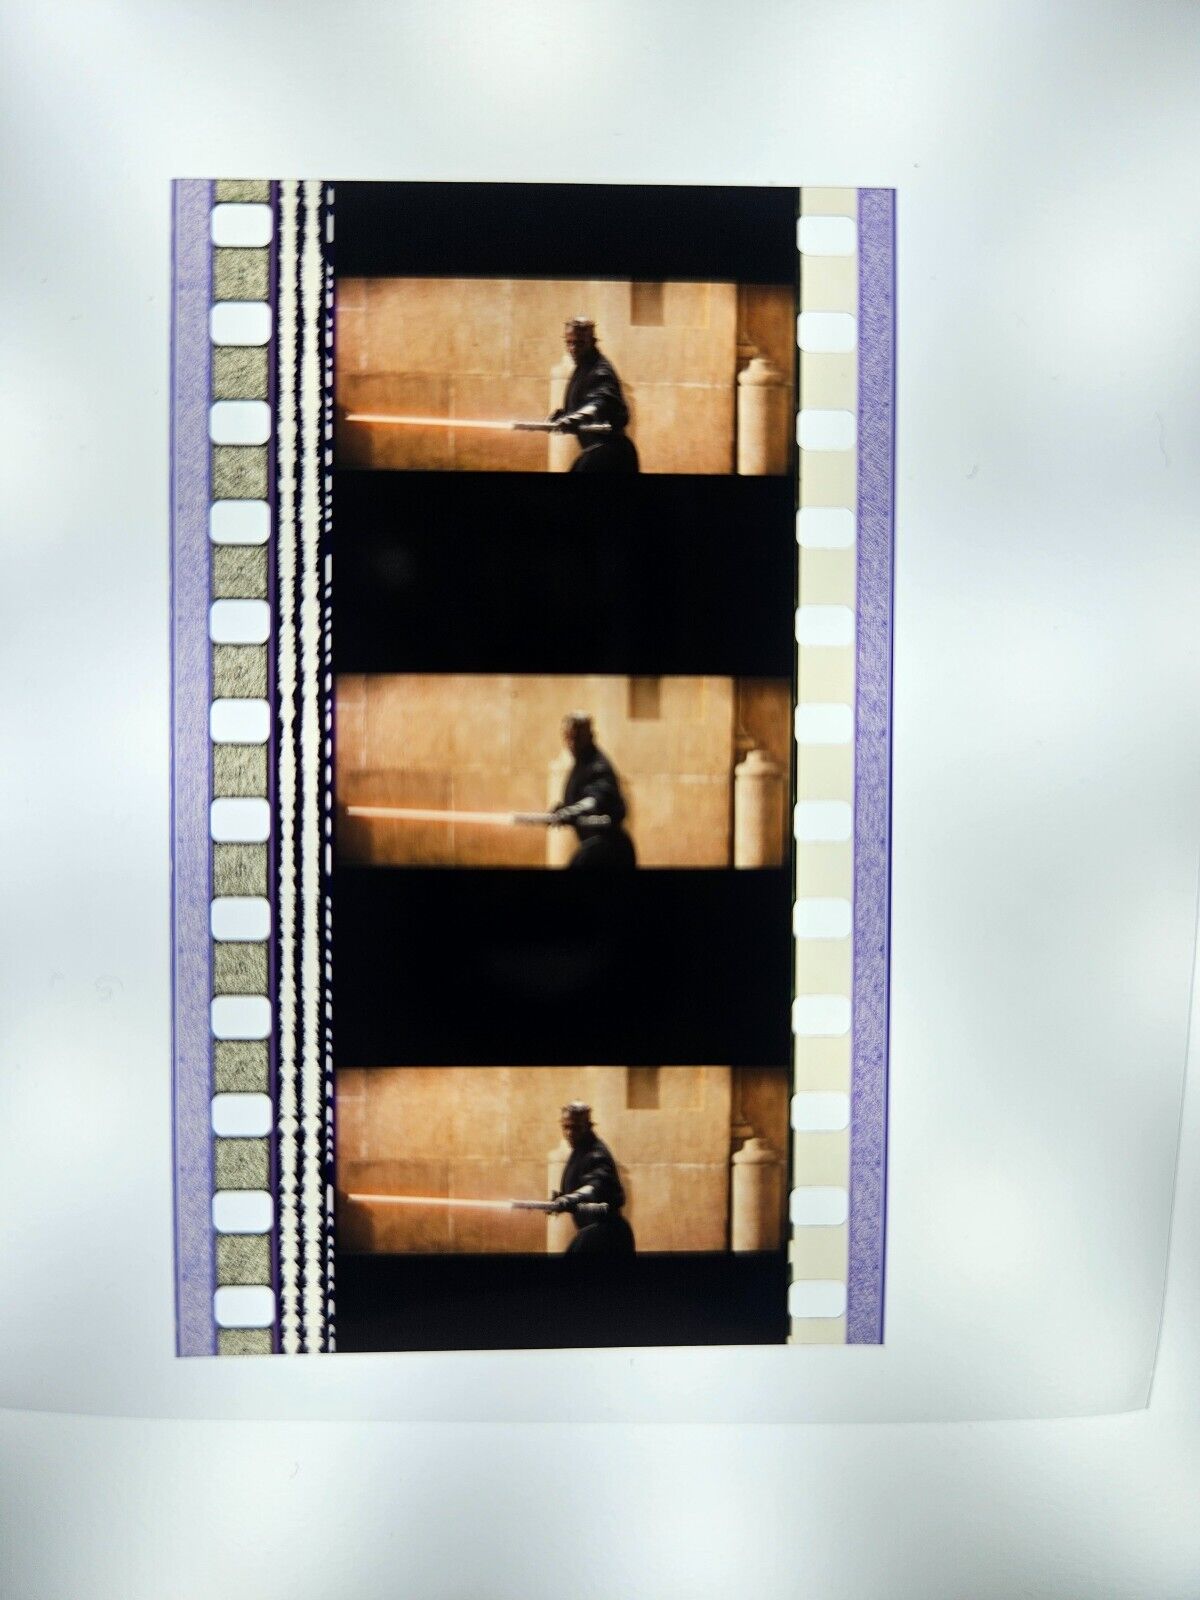 Darth Maul Star Wars Episode 1 Phantom Menace 35mm Original Film Cells SW2074 Star Wars 35mm Film Cell - Hobby Gems